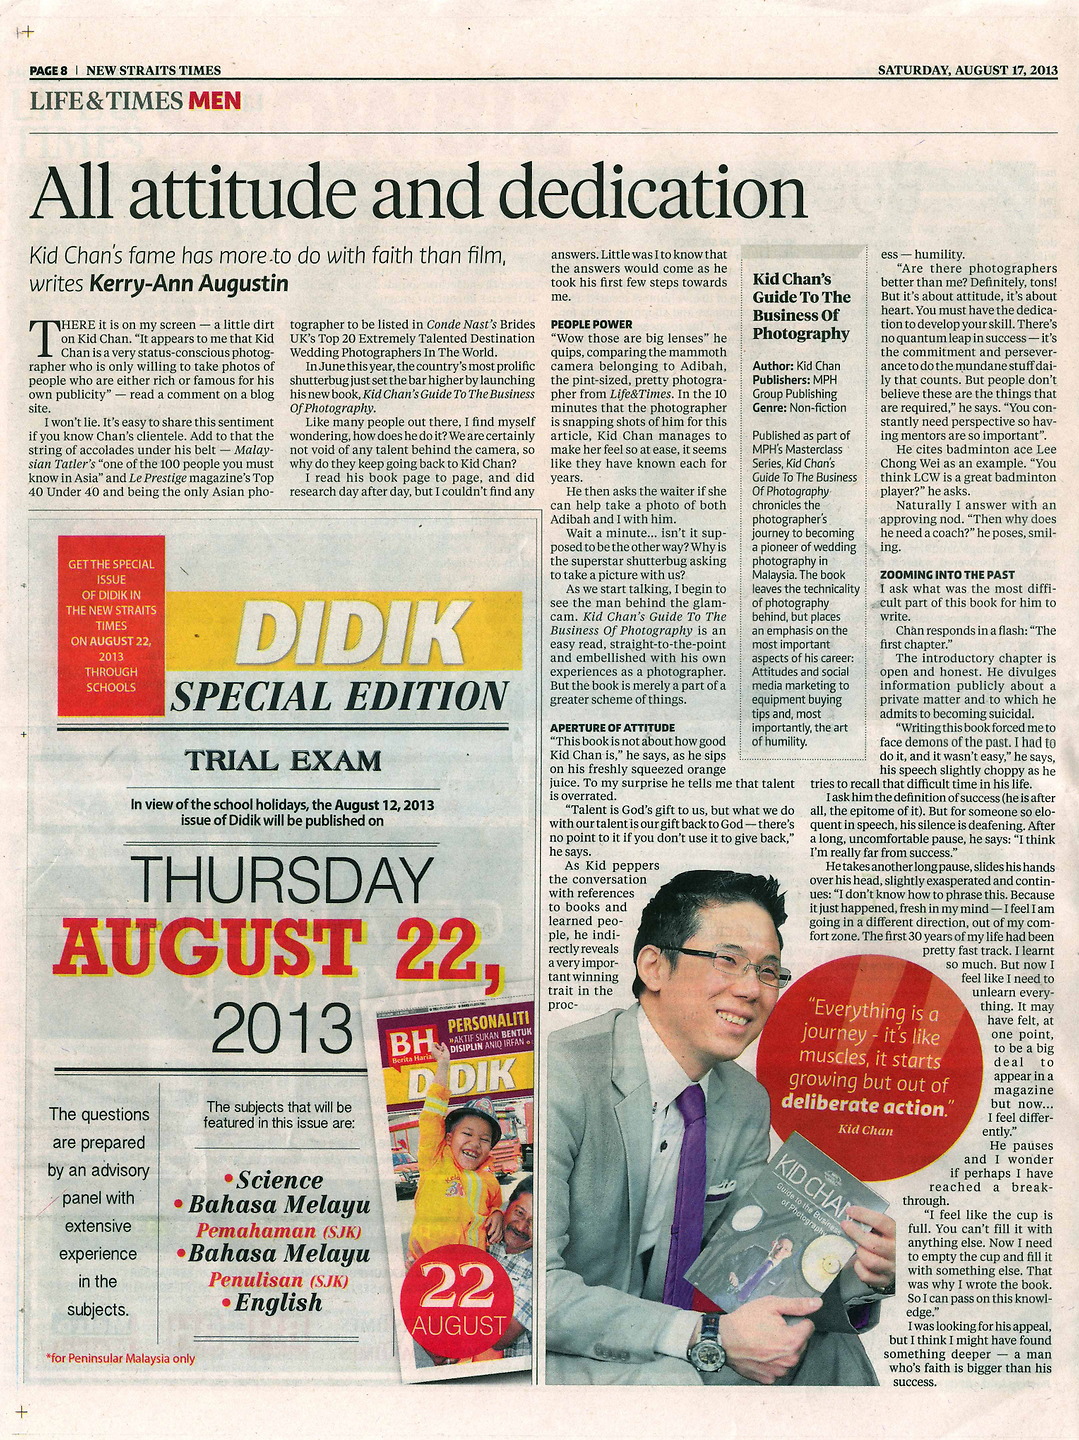 New Straits Times August 2013: Kid Chan - 'All Attitude & Dedication'